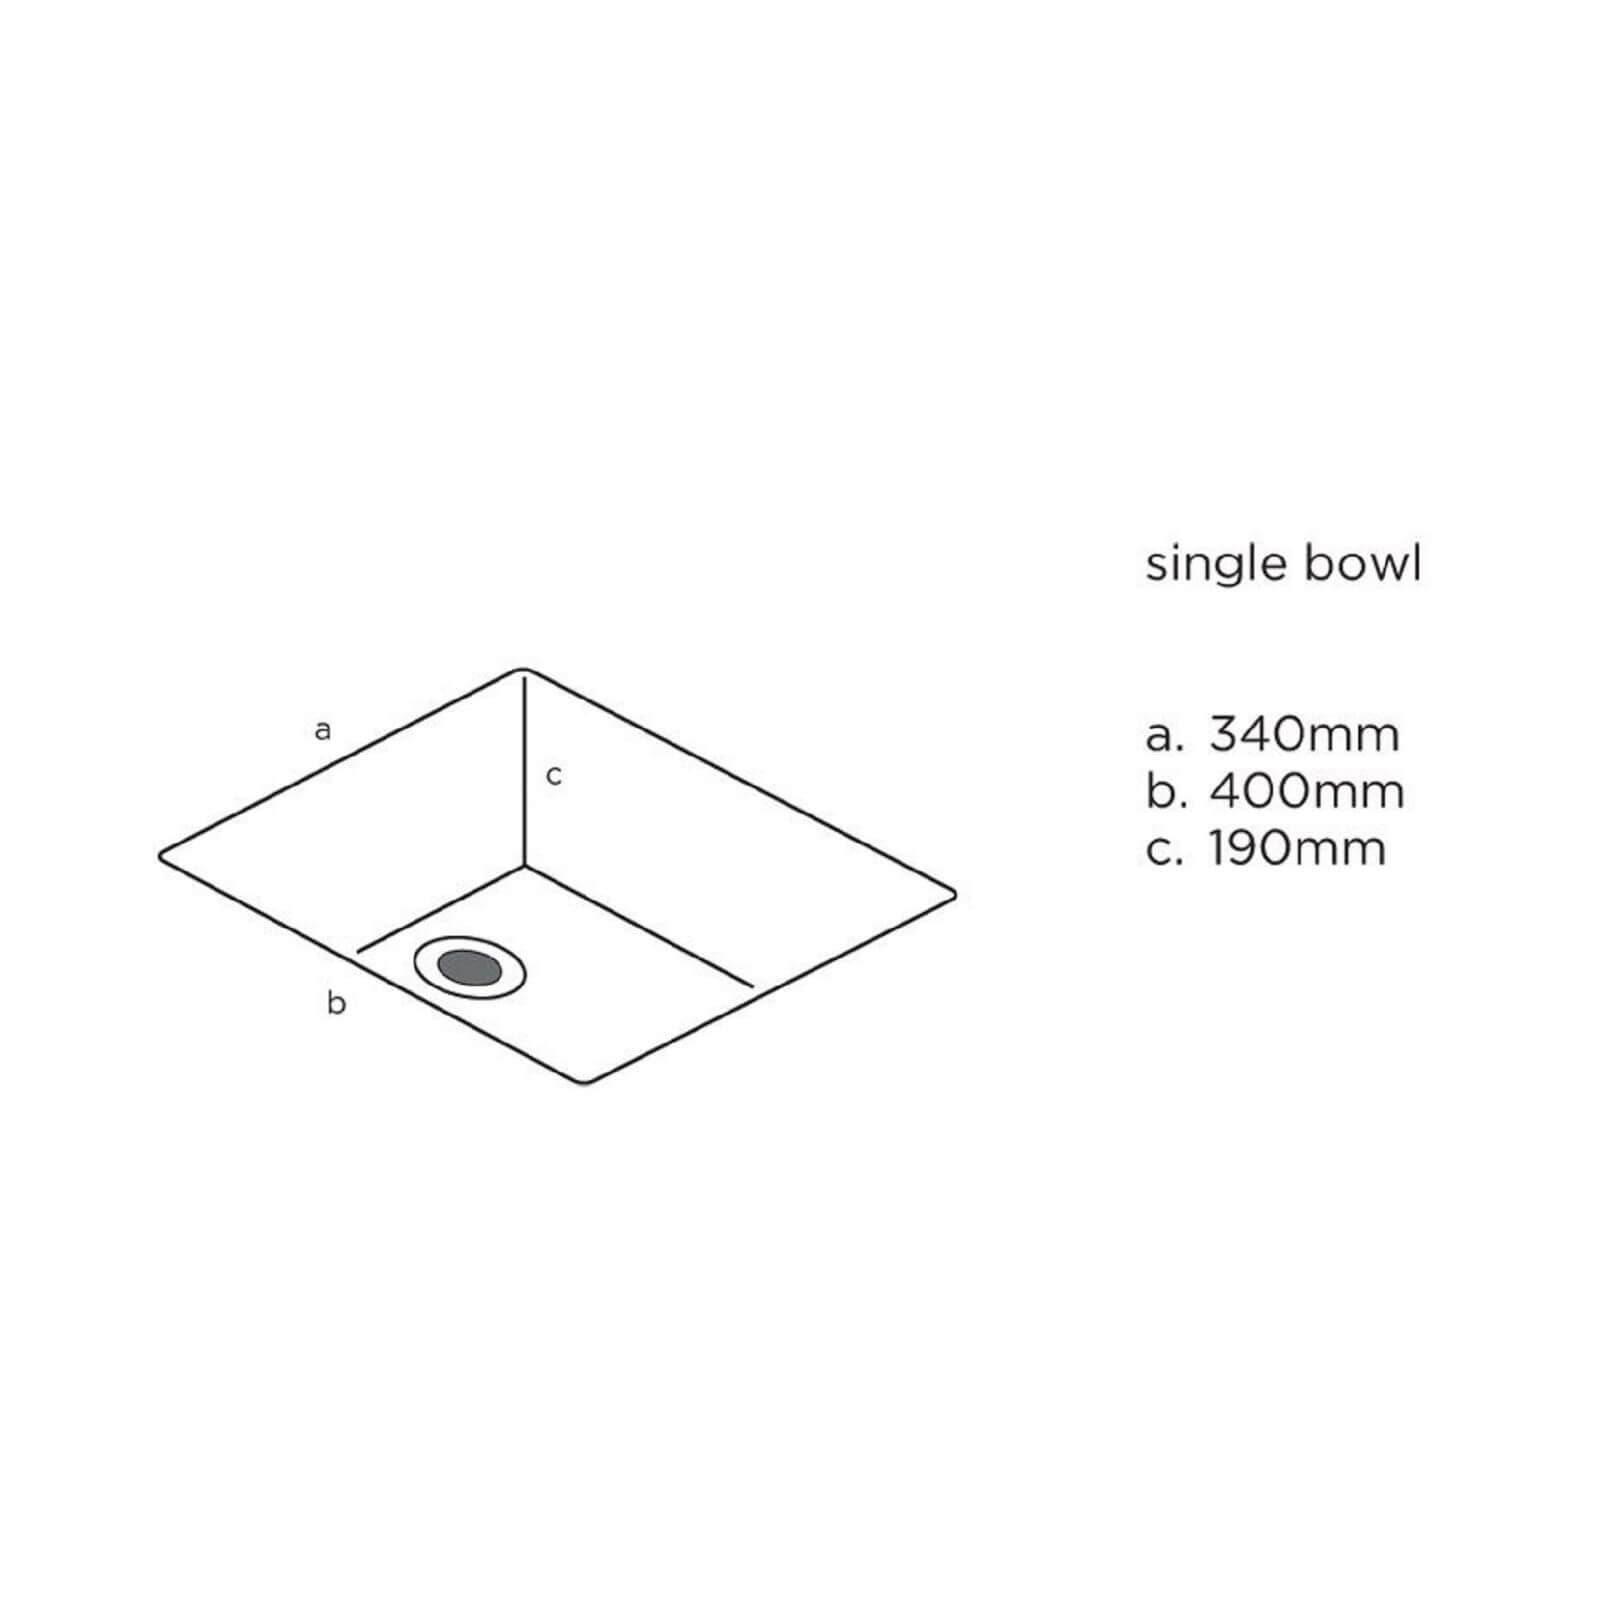 Maia Brazilian Greige Kitchen Sink Worktop - Universal Bowl - 1800 x 600 x 42mm